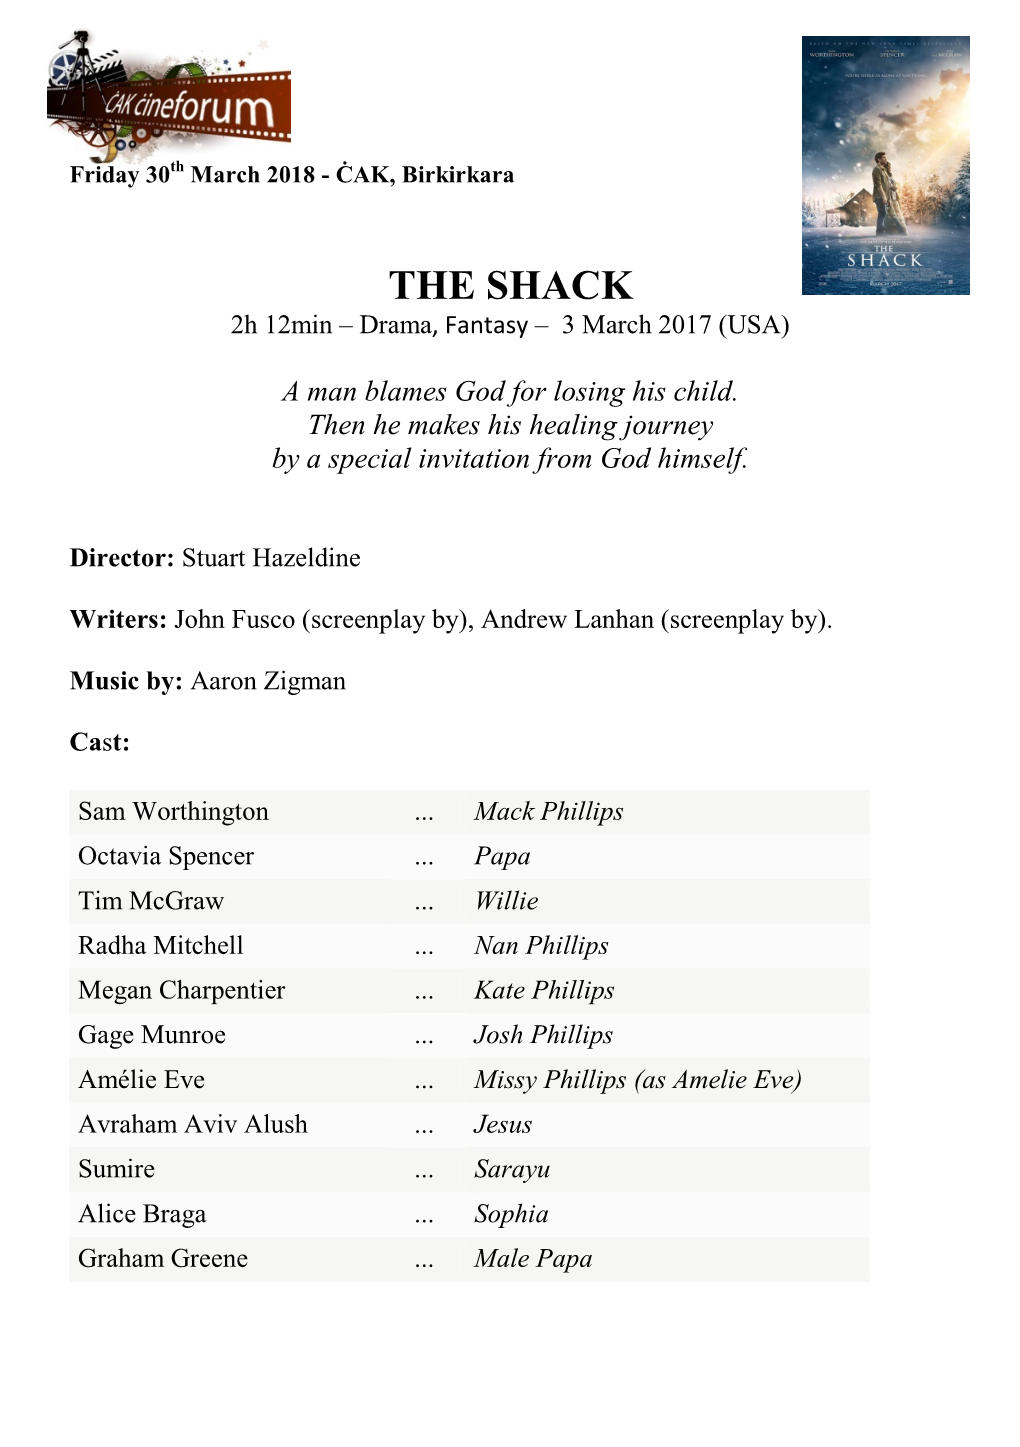 THE SHACK 2H 12Min – Drama, Fantasy – 3 March 2017 (USA)